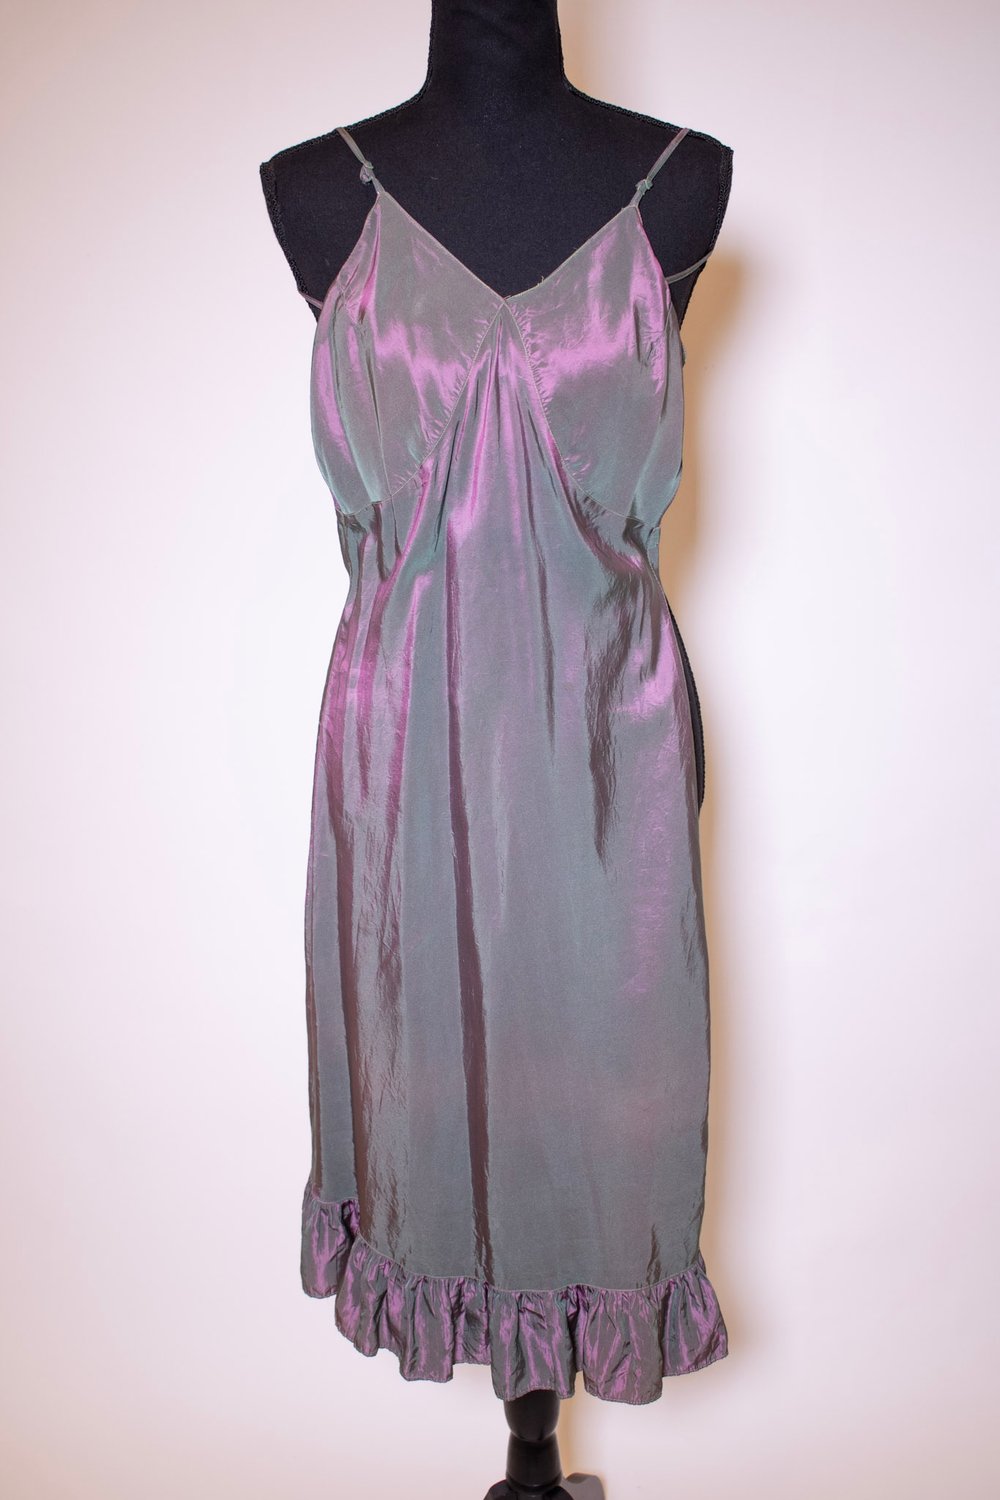 Image of Vintage Slip Dress - P2P=15”